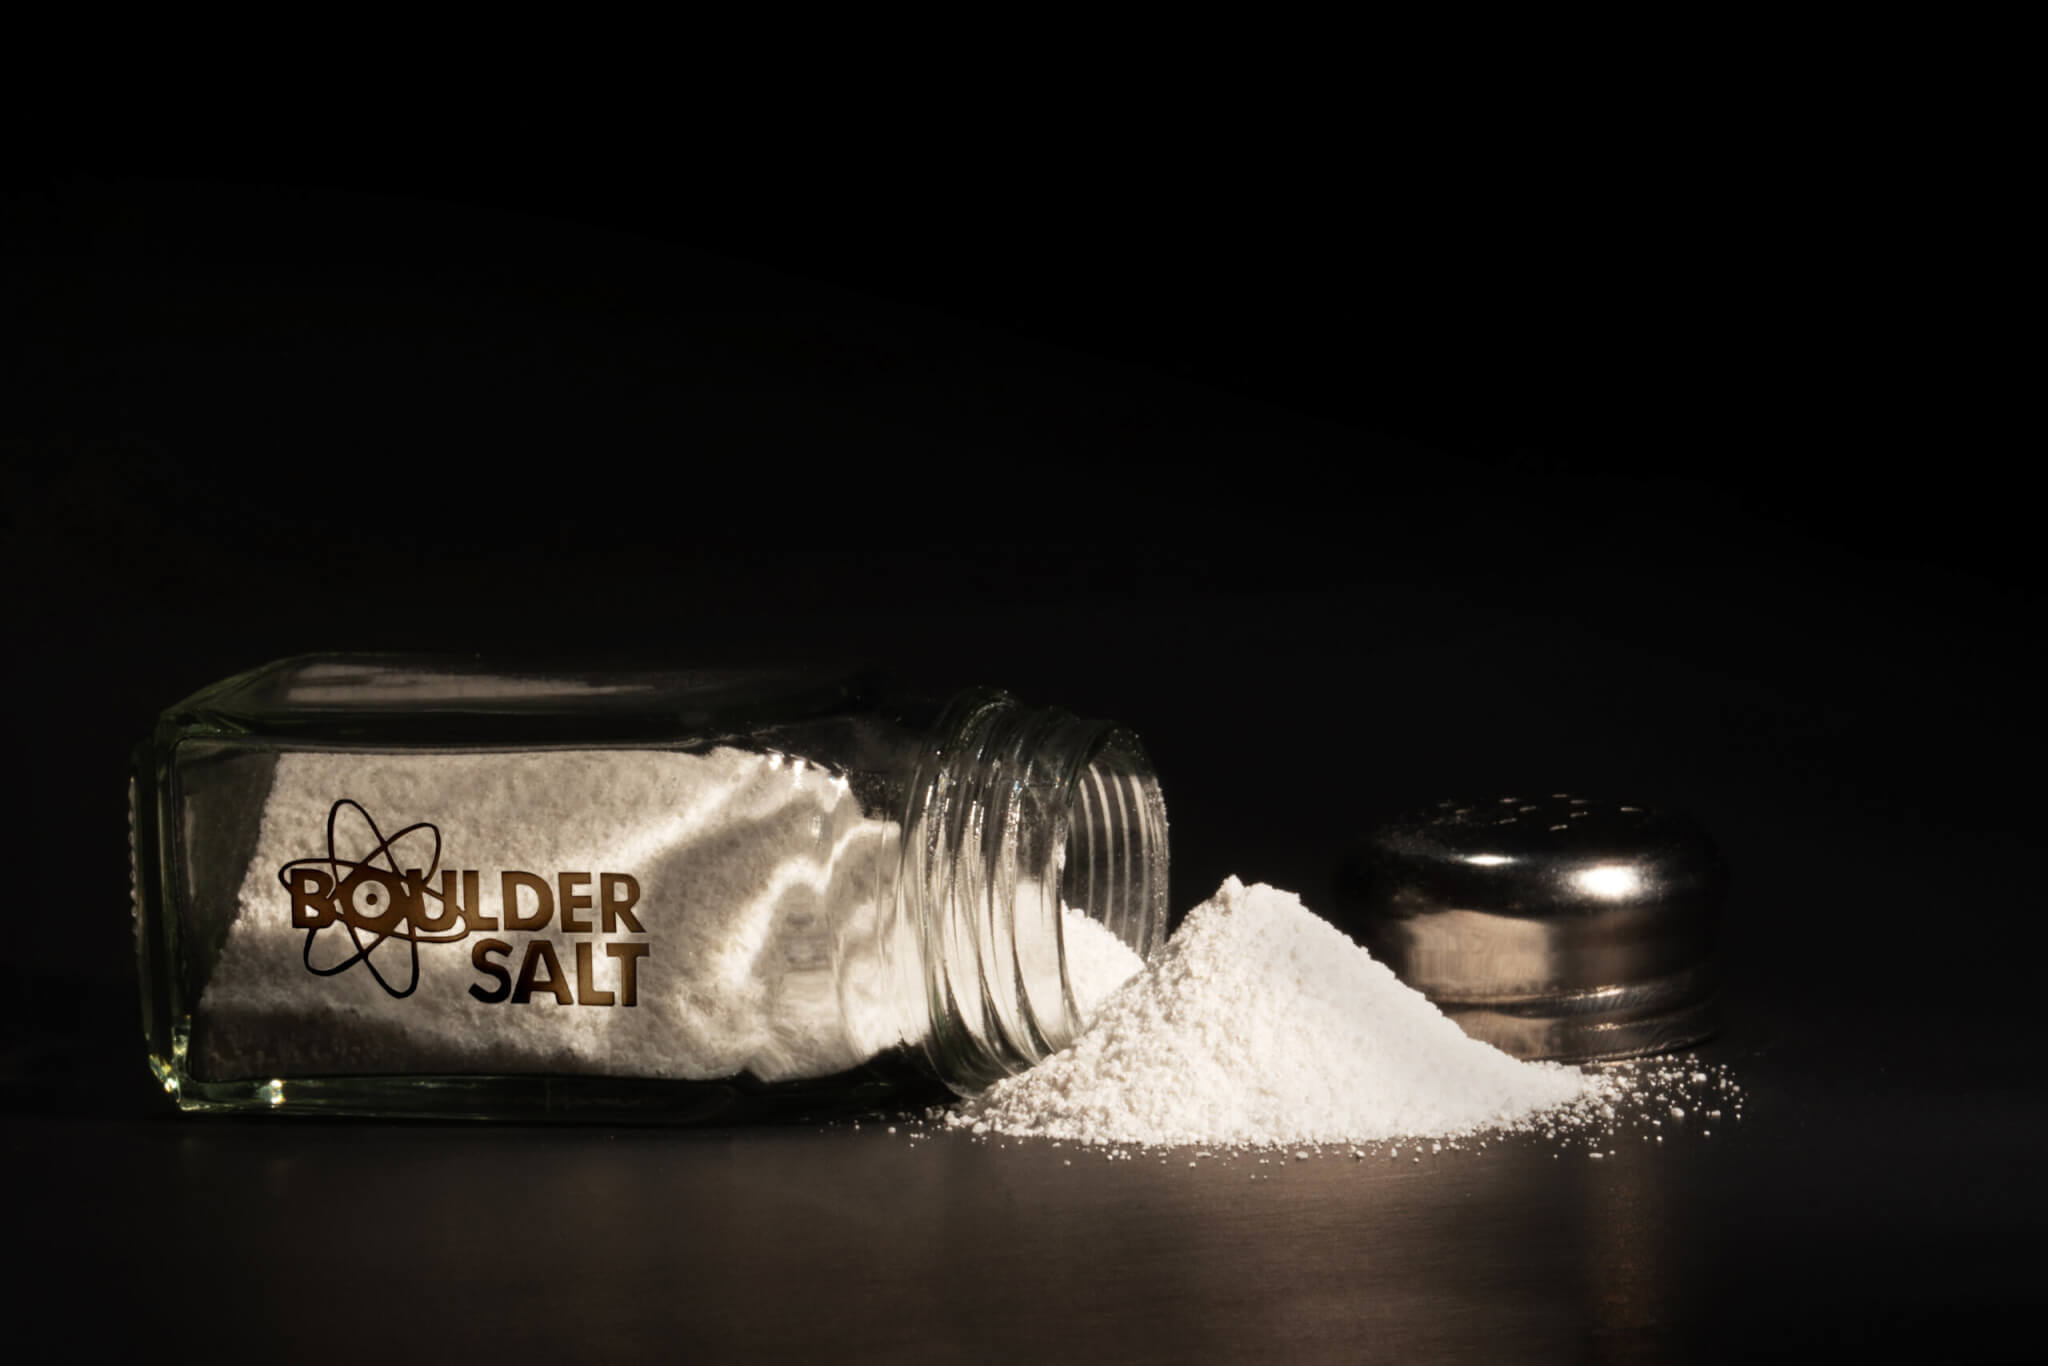 Low Sodium Salt Fresh, Delicious & Better Healthy Salt With Zero Measurable  Sodium and Delicious Taste 